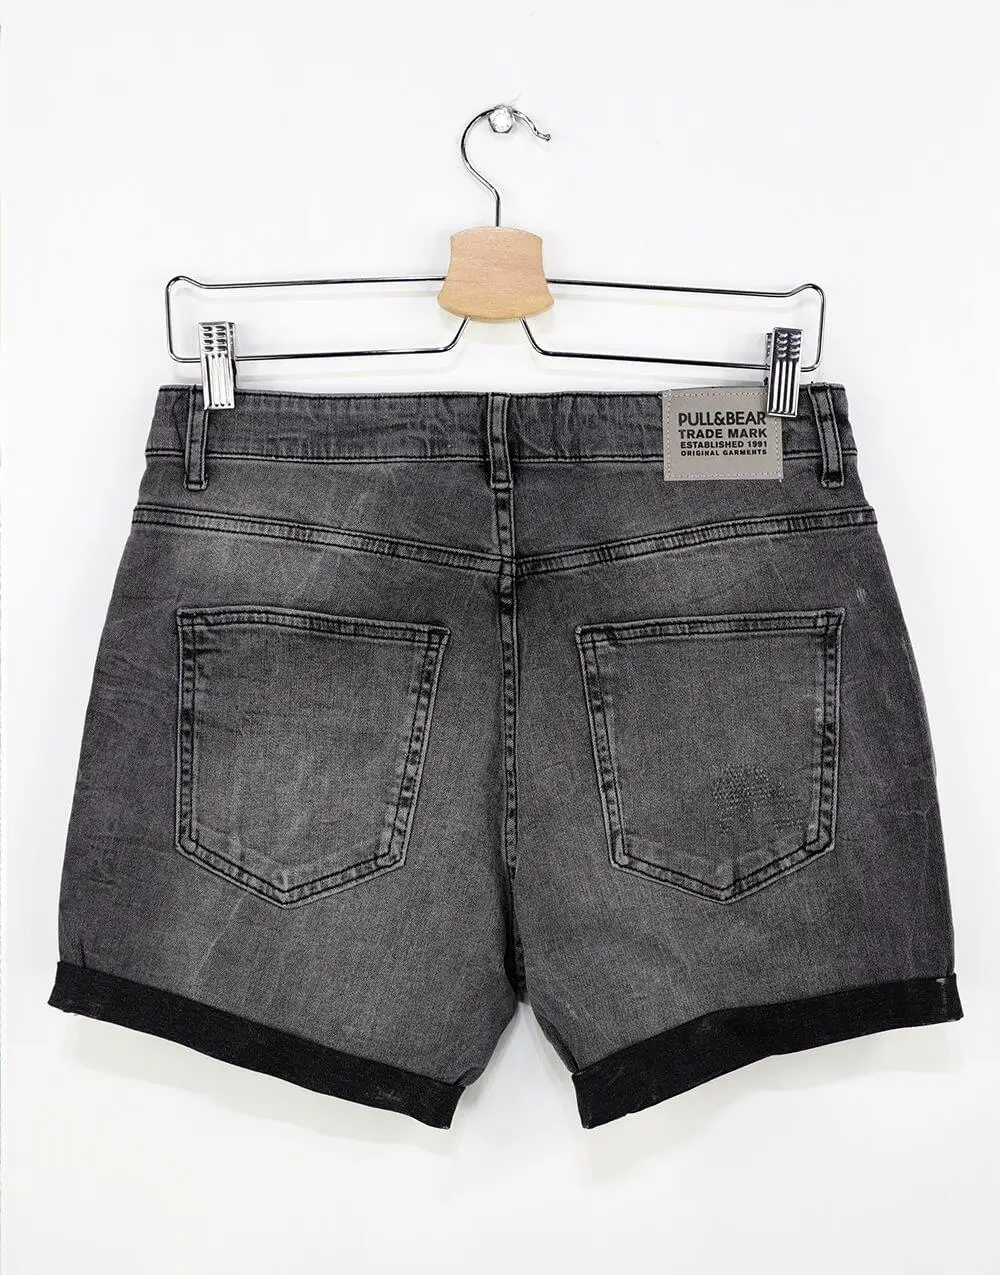 Bear pantalones vaqueros ajustados para hombre, color gris|Pantalones cortos| - AliExpress